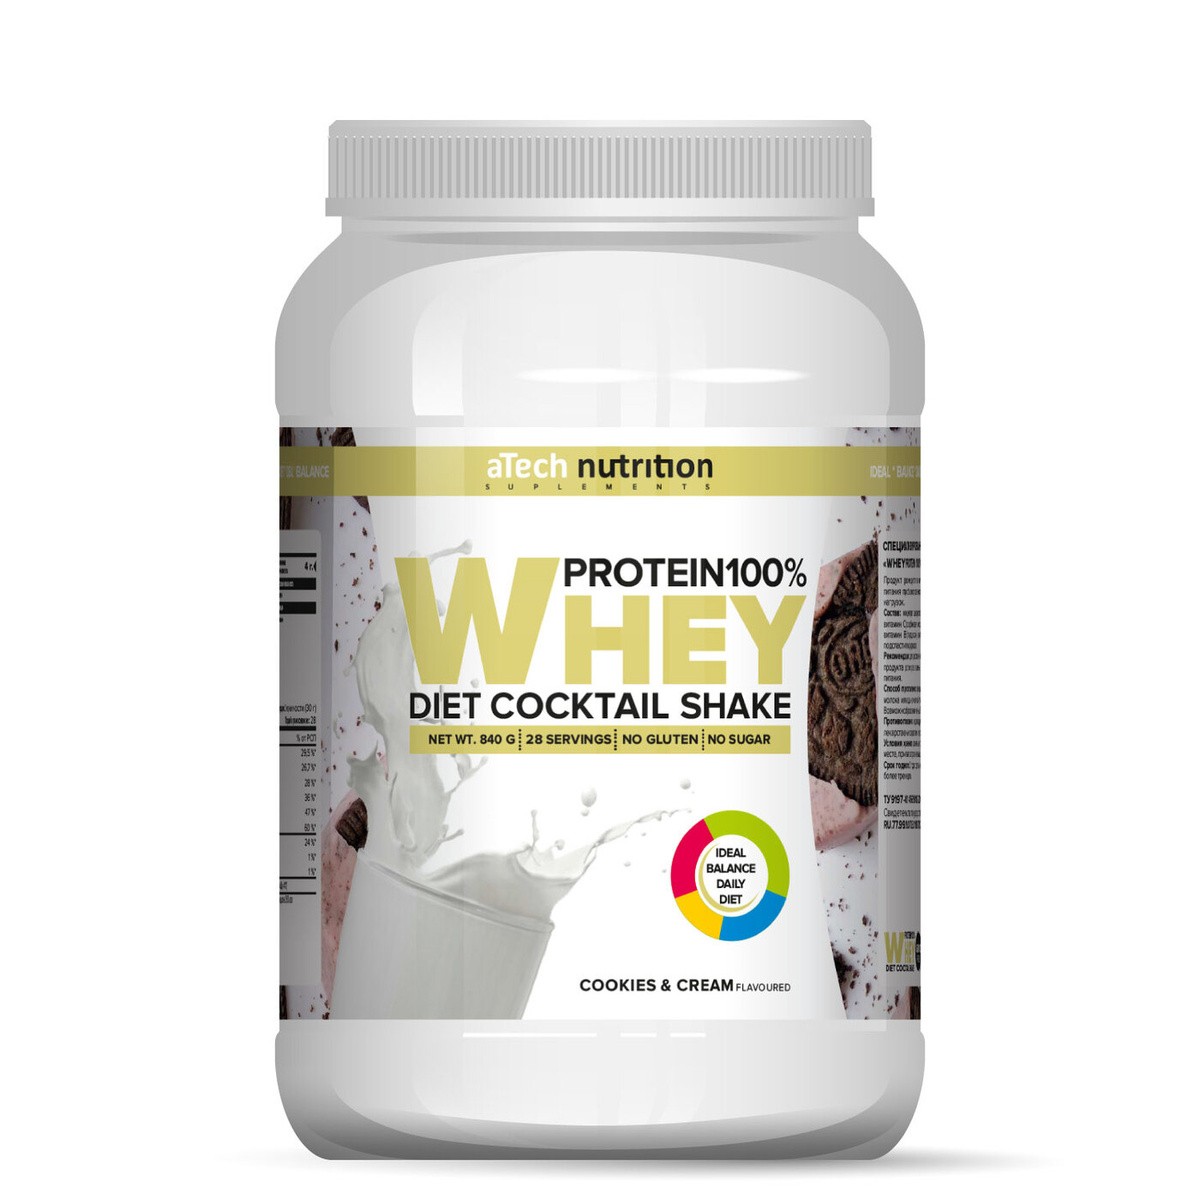 Протеин Whey Protein 100%, aTech Nutrition 840 гр., печенье - сливки